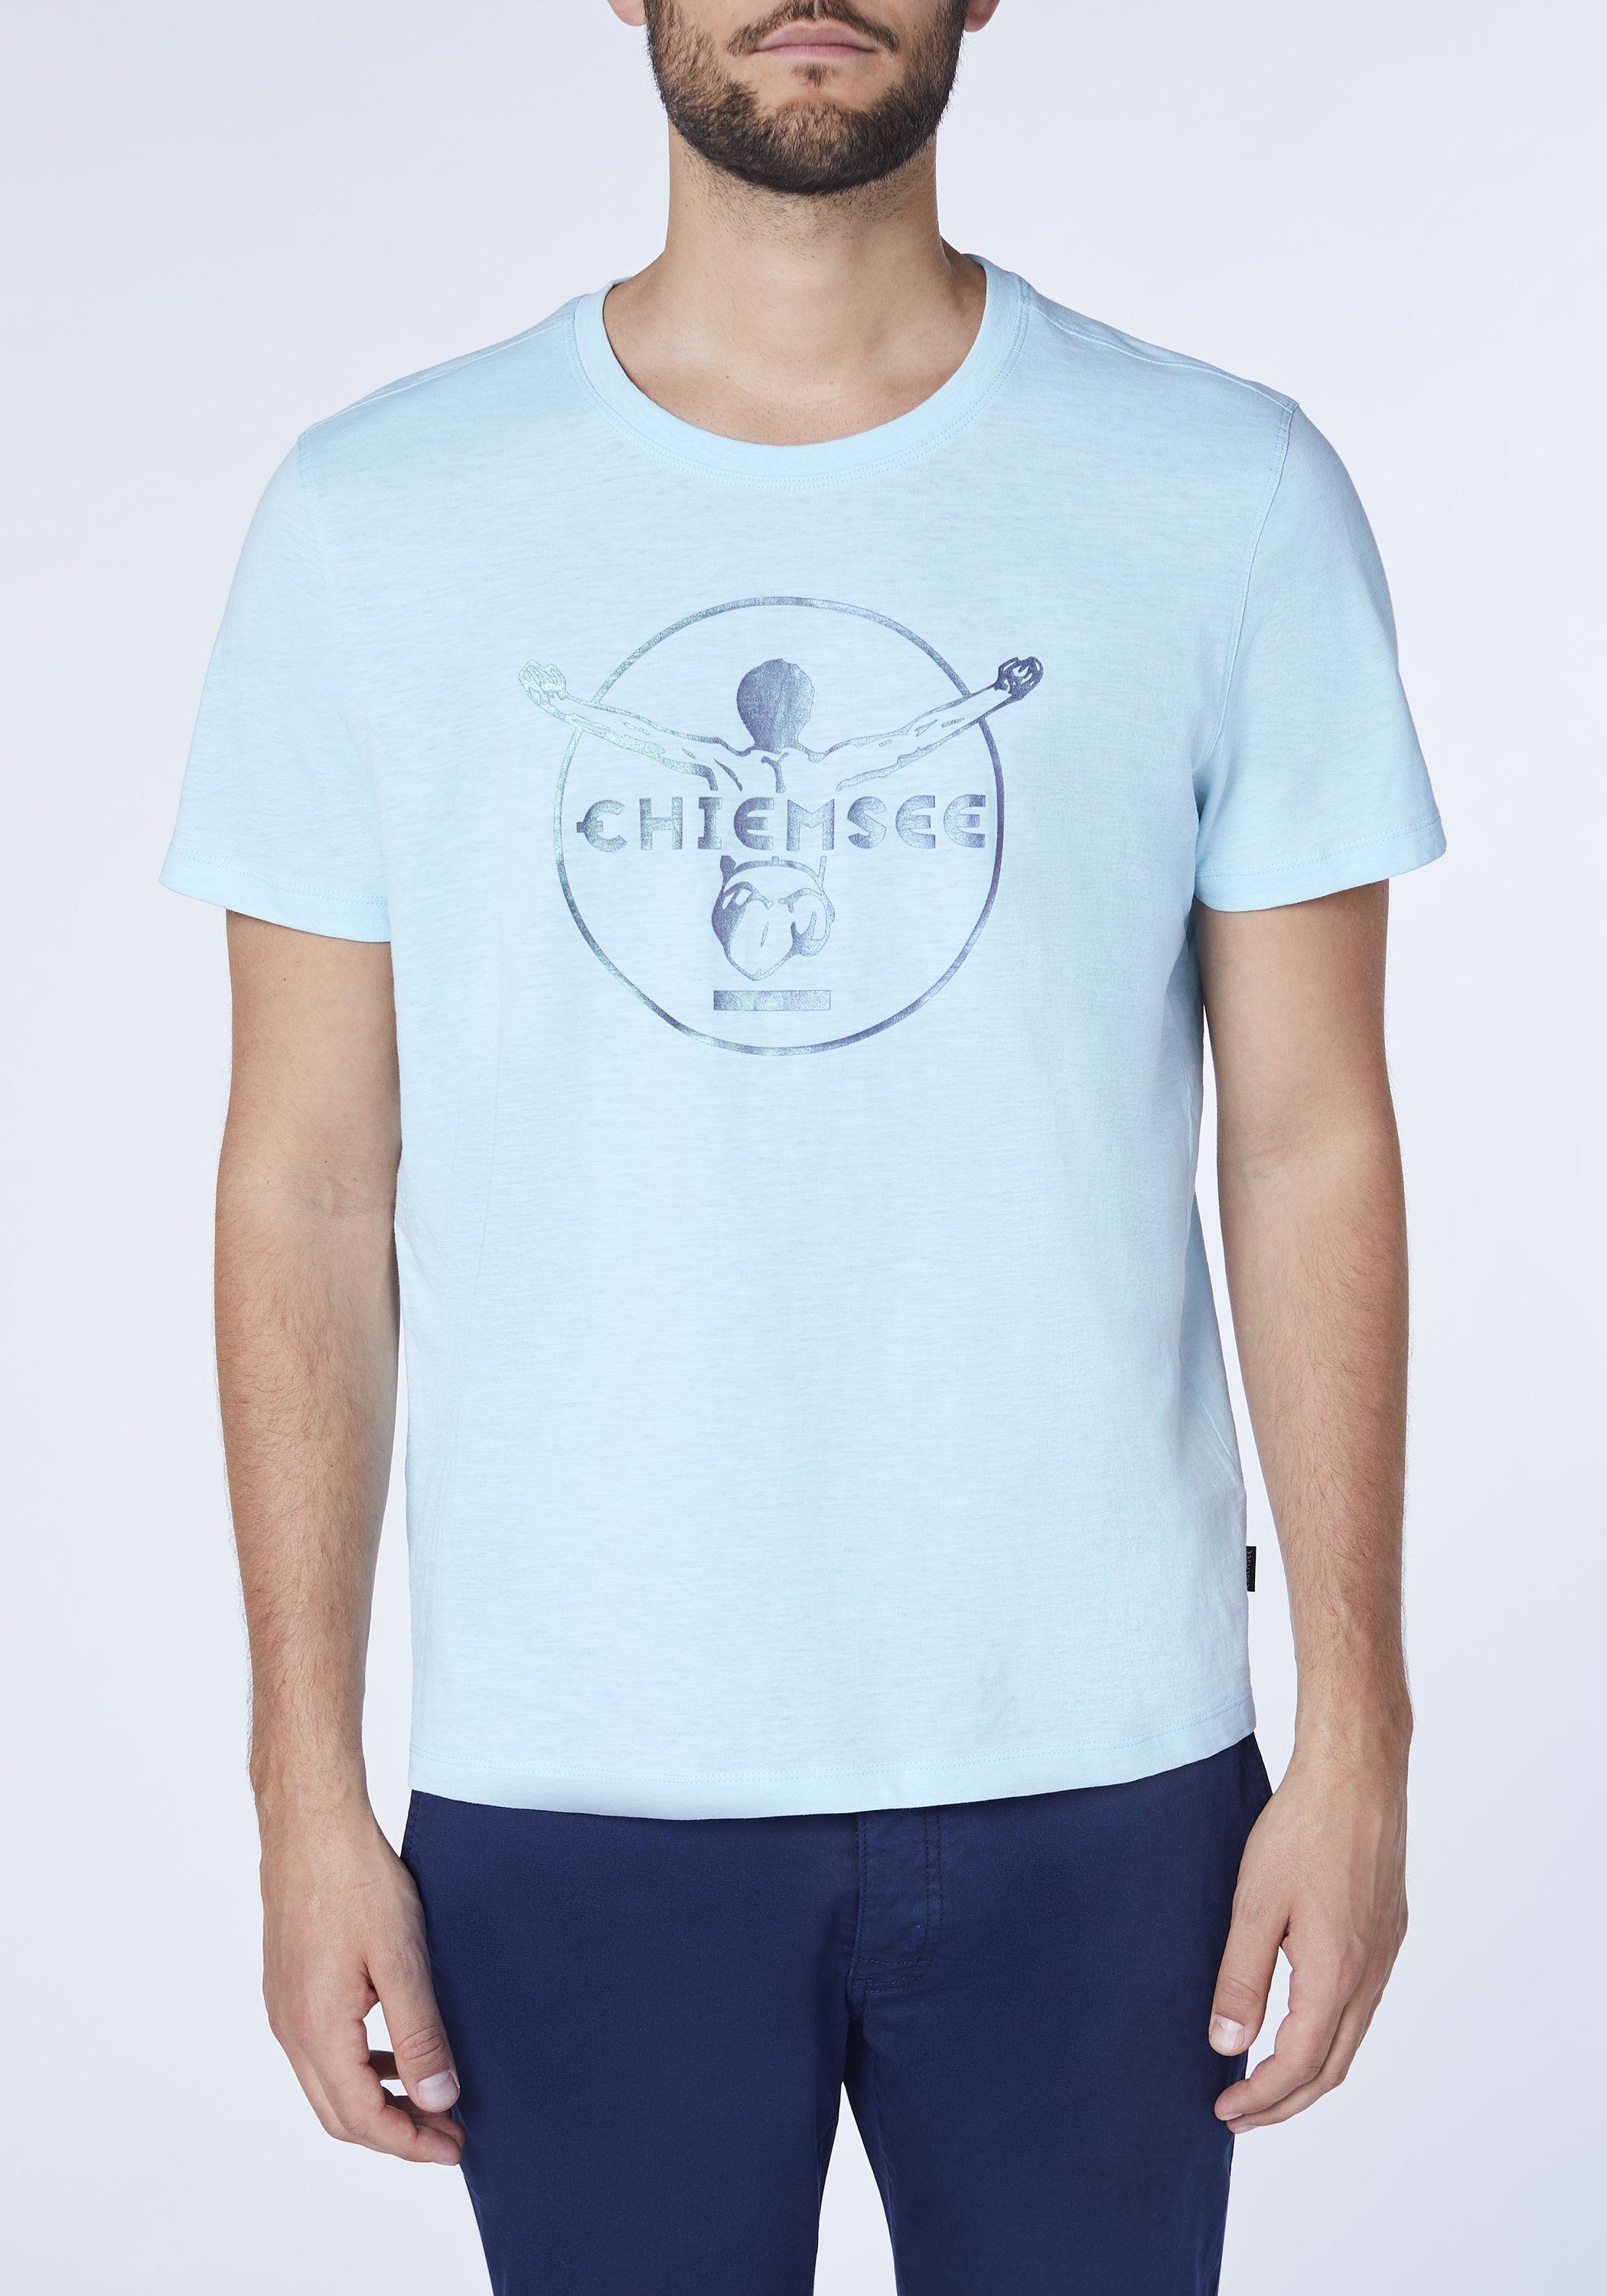 Label-Symbol Chiemsee T-Shirt gedrucktem Print-Shirt Coryda 1 Blue mit